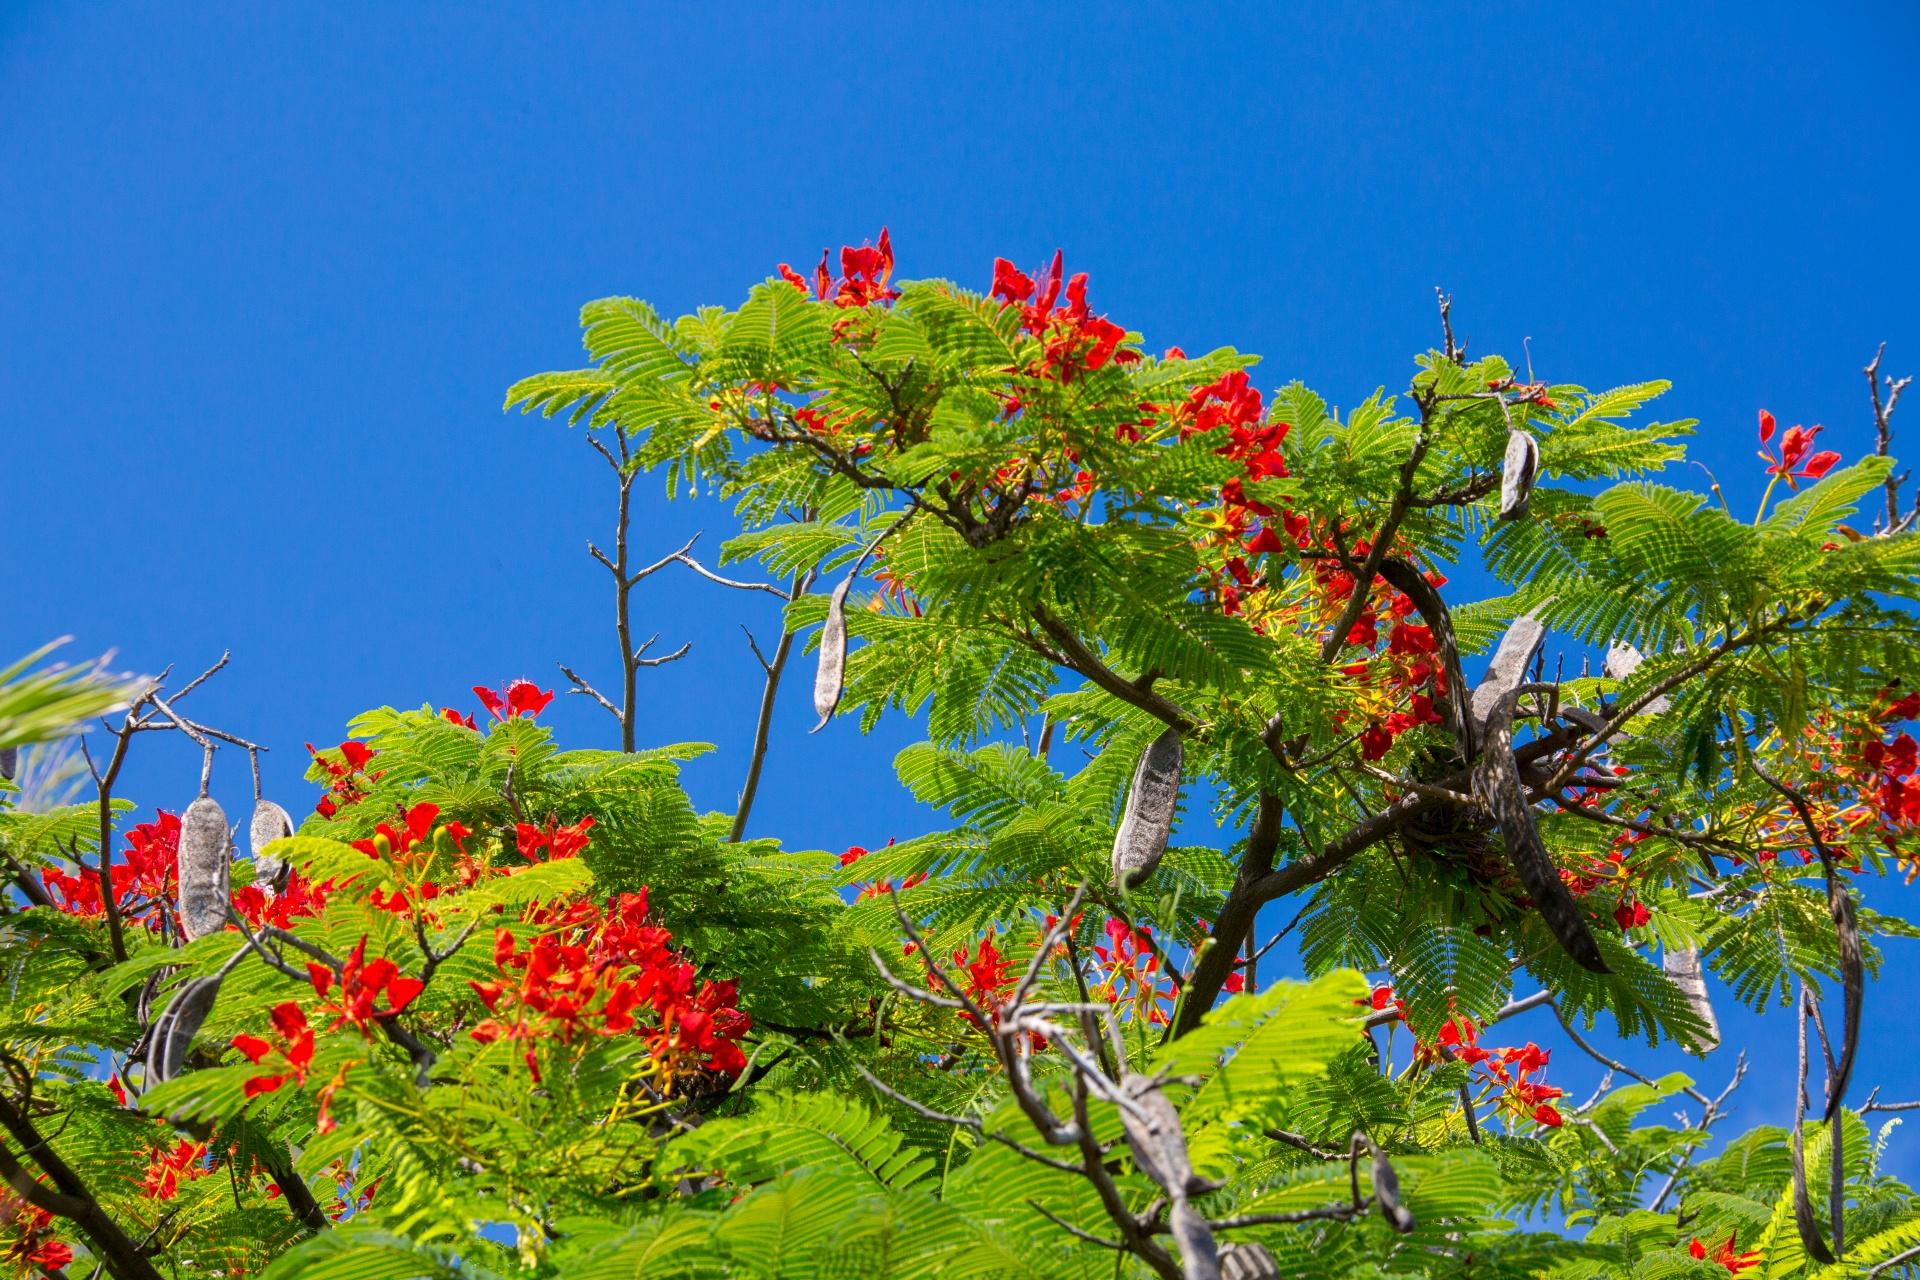 Royal poinciana tree against blue sky